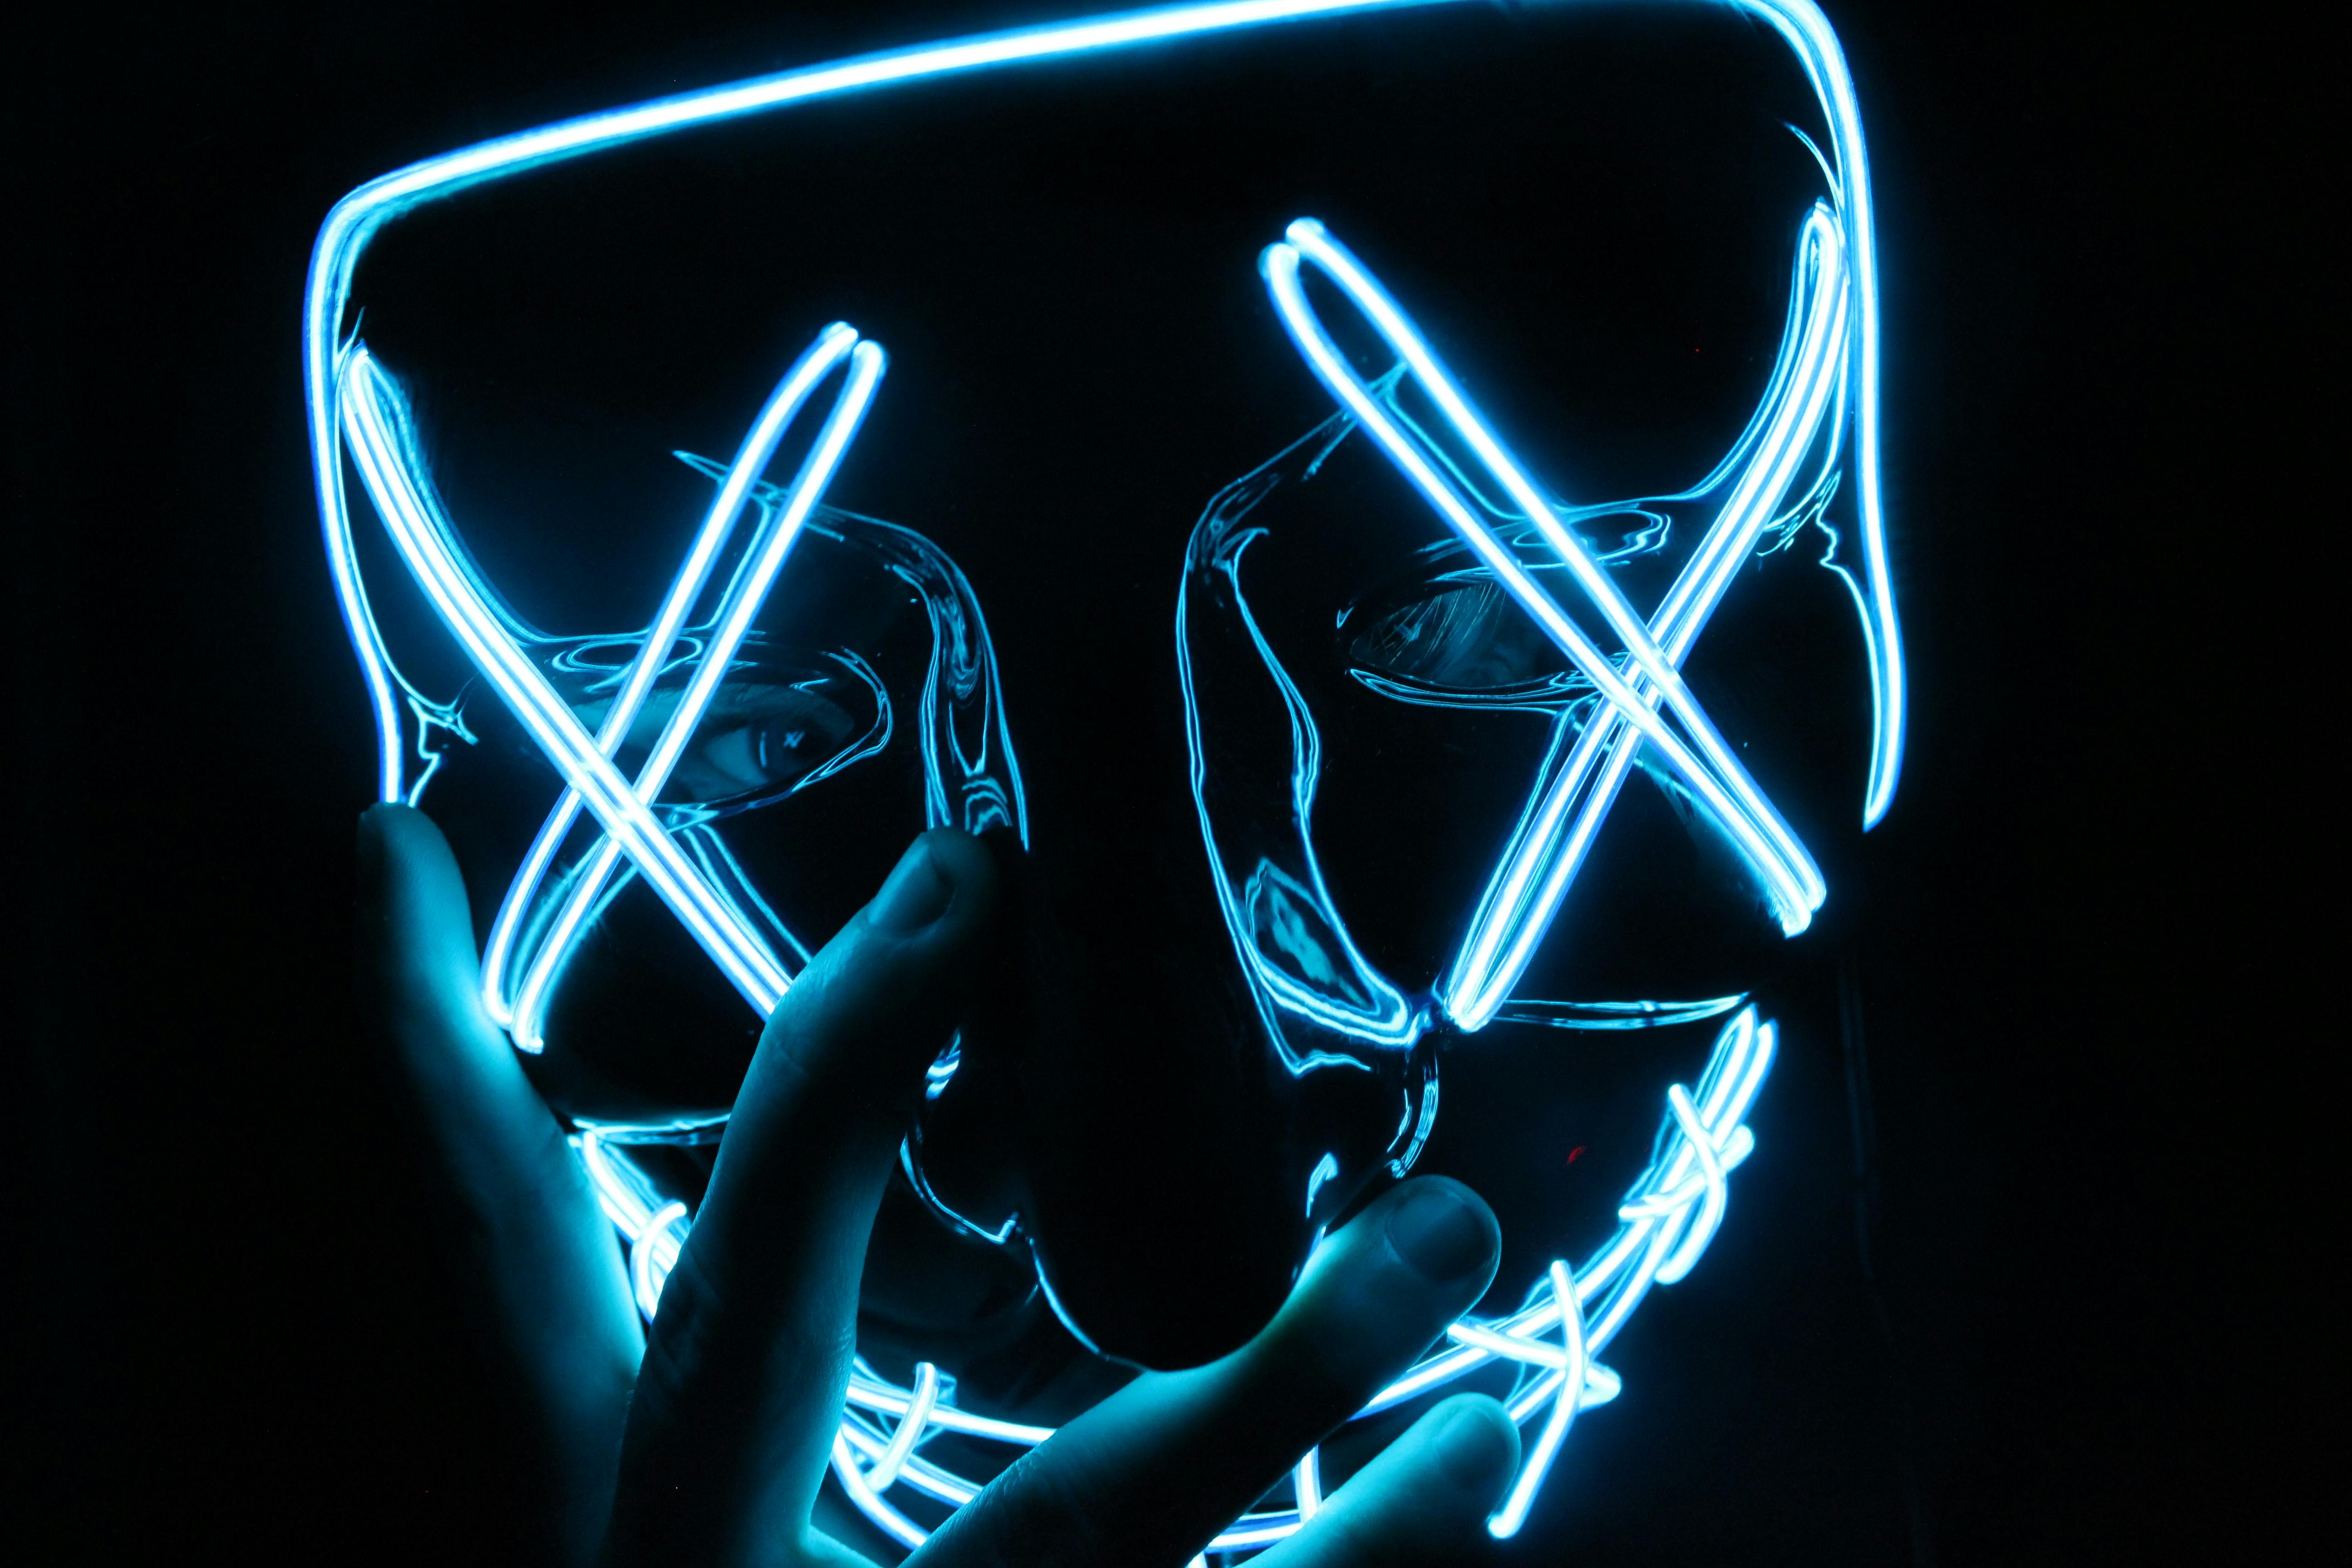 Neon Mask Boy Wallpapers - Top 30 Best Neon Mask Boy Wallpapers Download